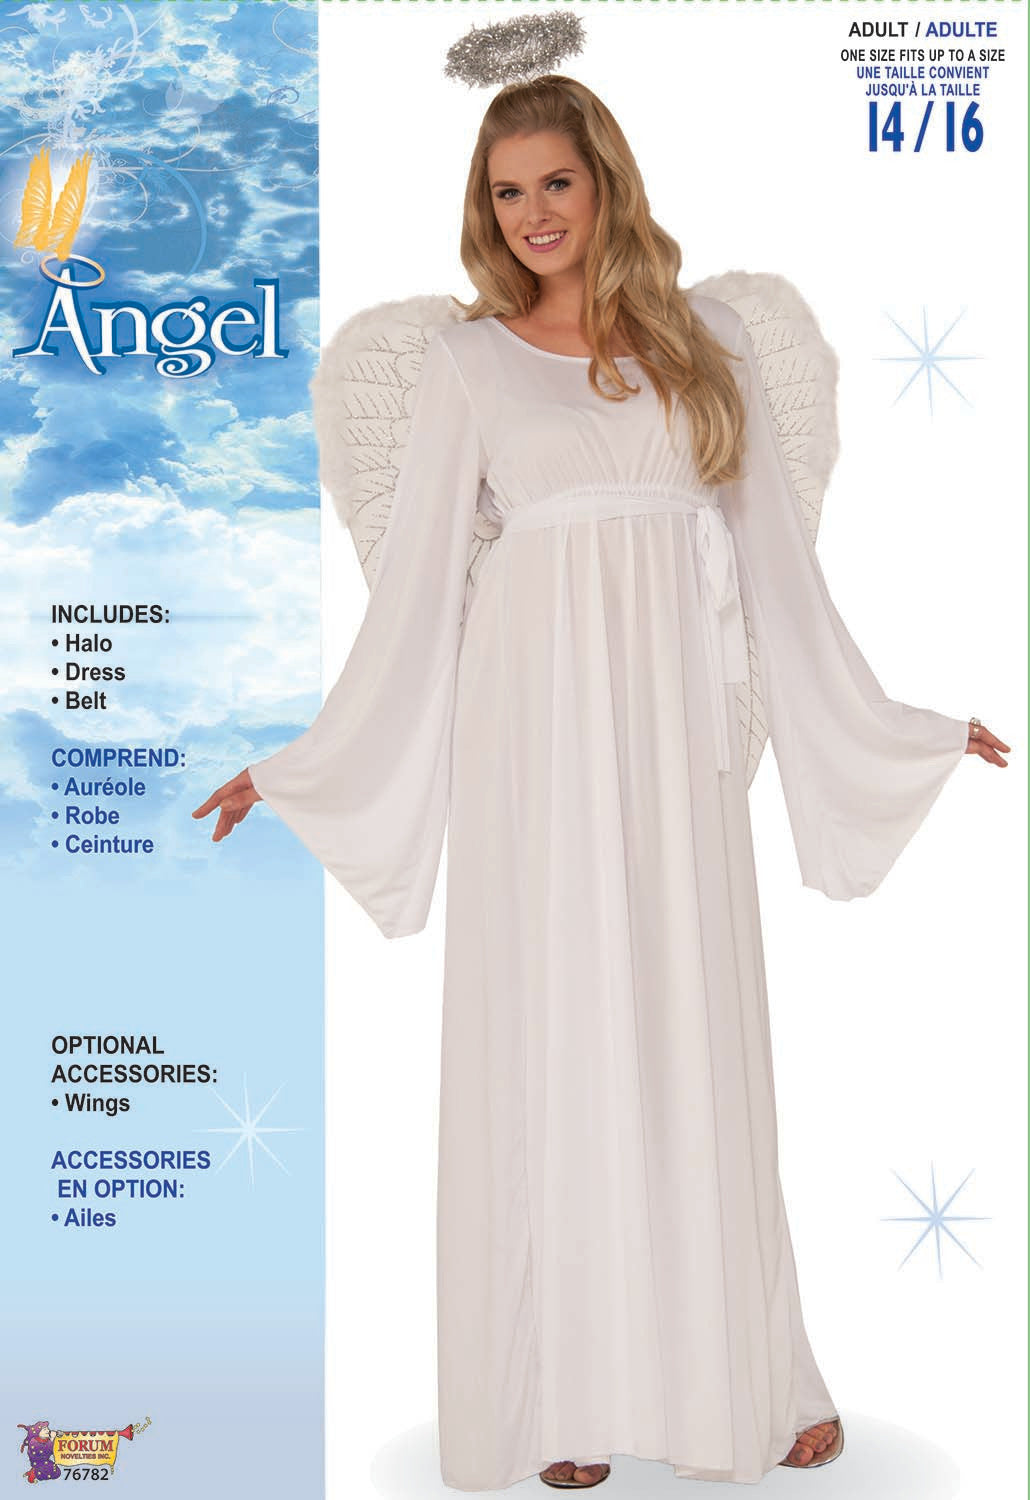 Angel - Standard Adult Size